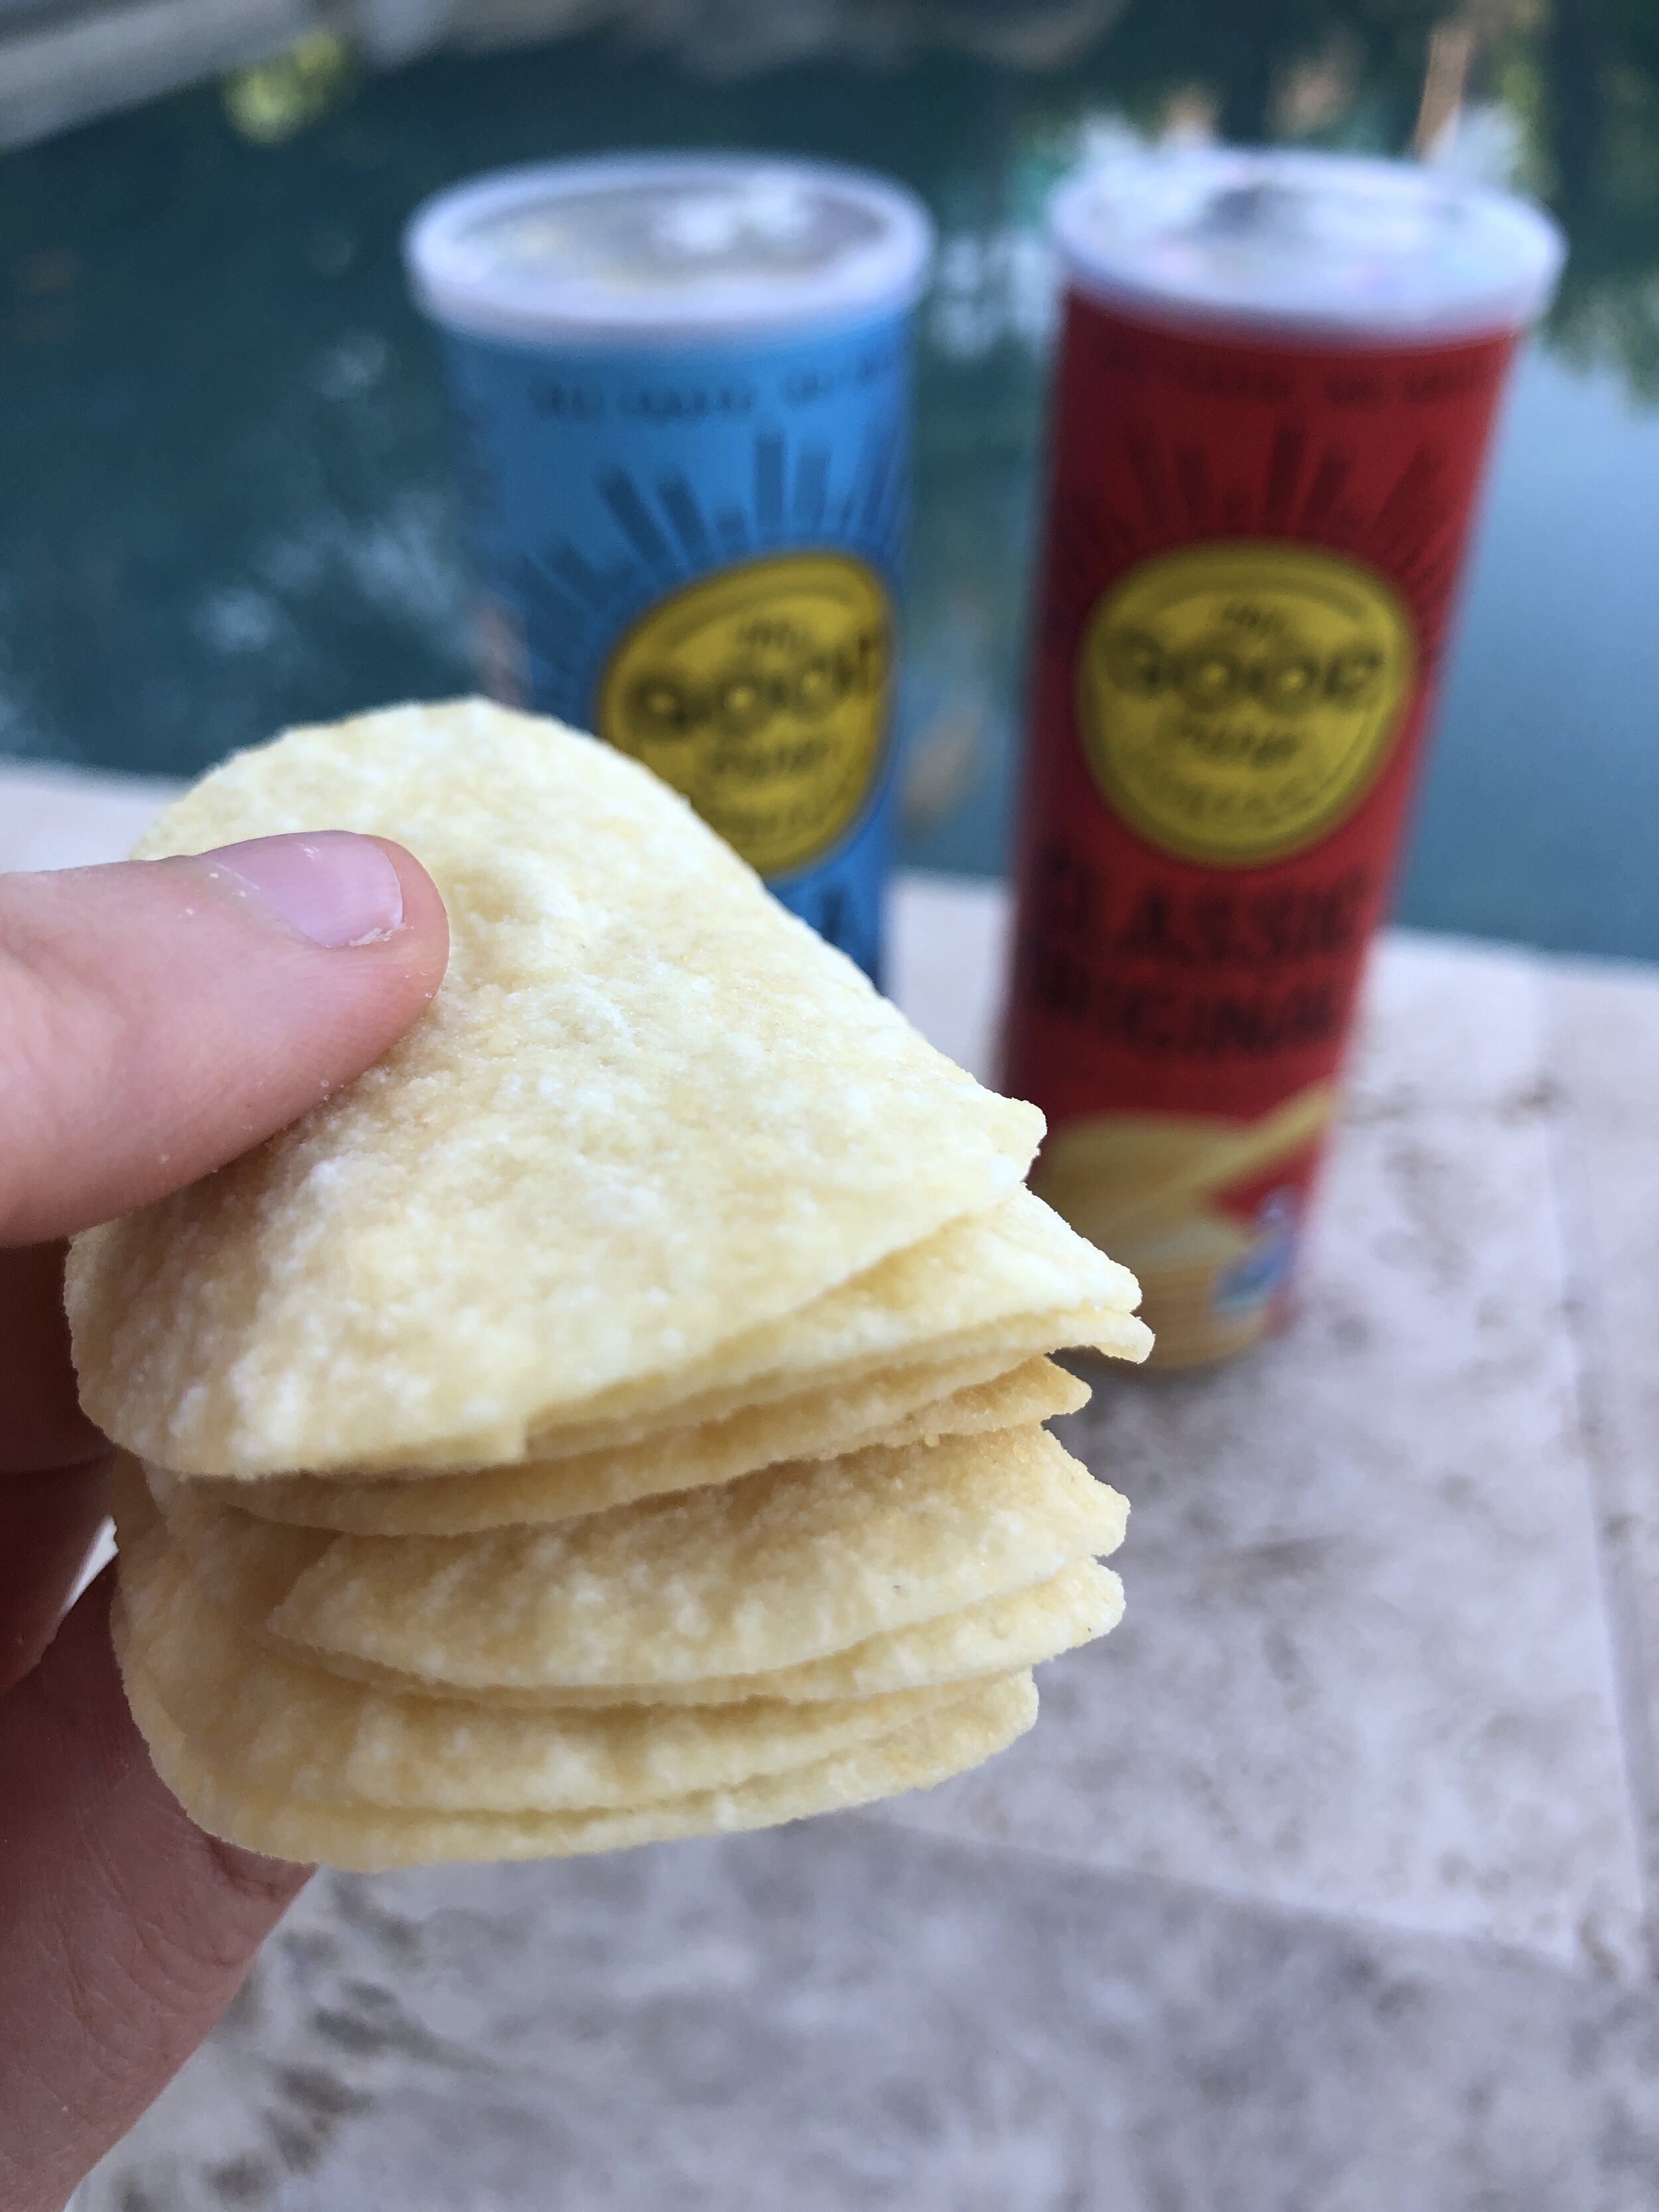 The good crisp gluten free chips discount